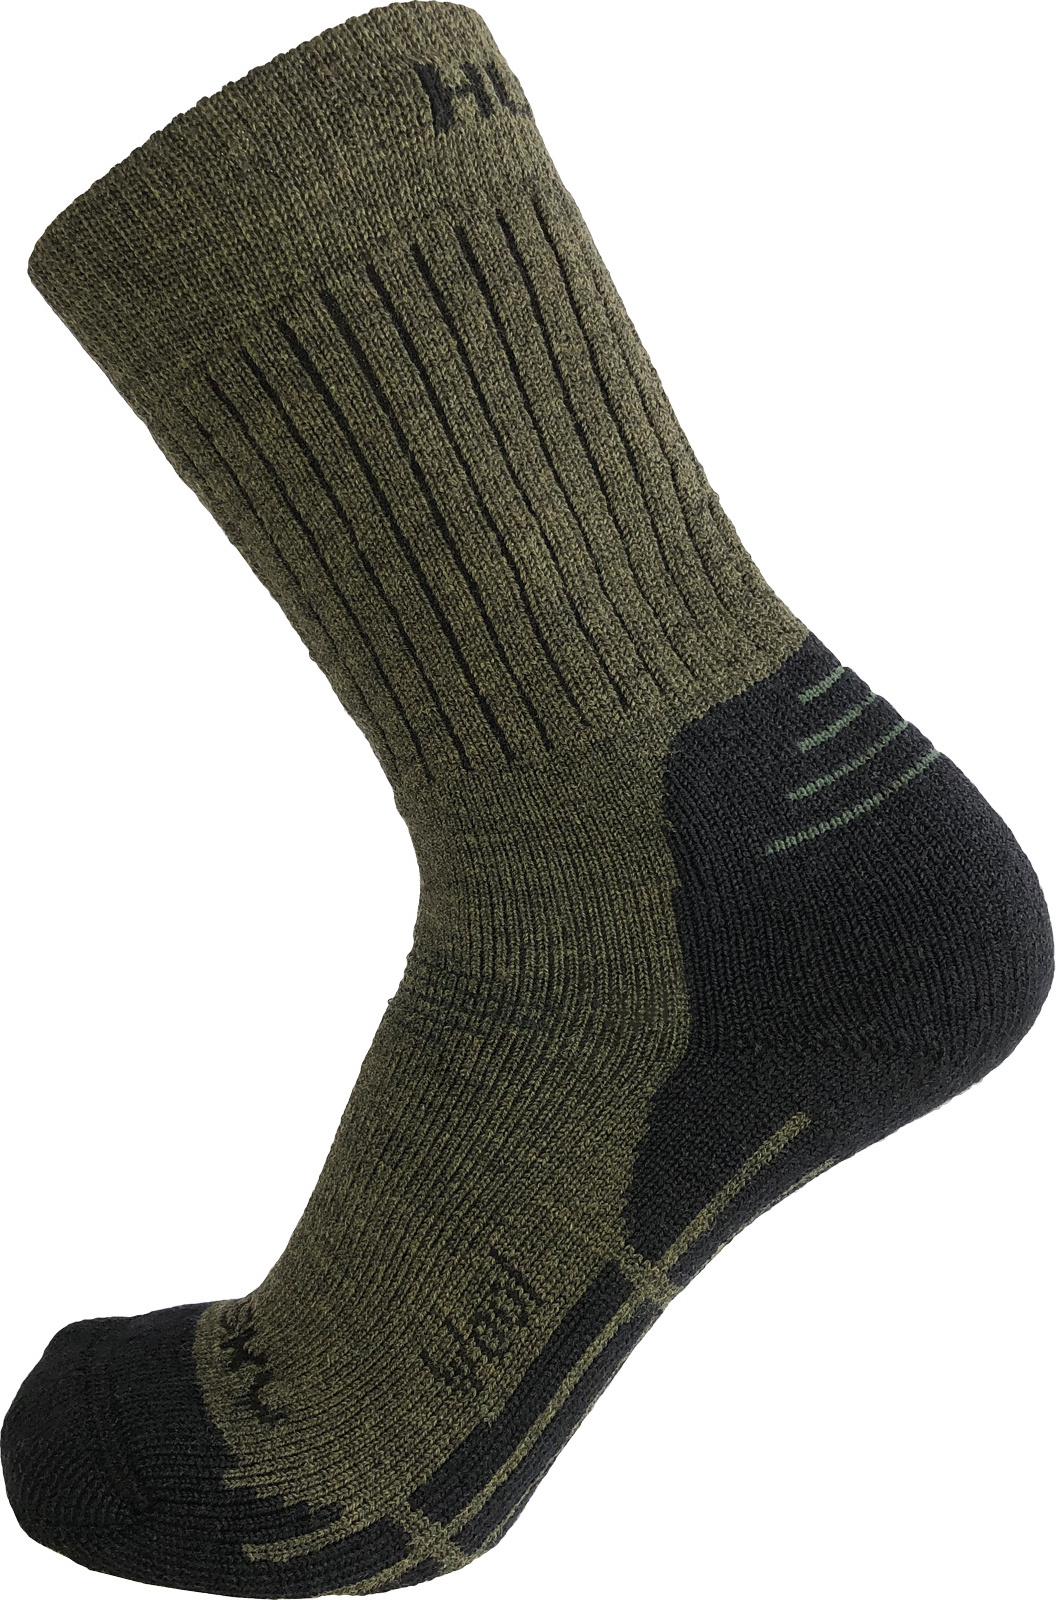 Ponožky HUSKY All Wool khaki Velikost: XL (45-48)